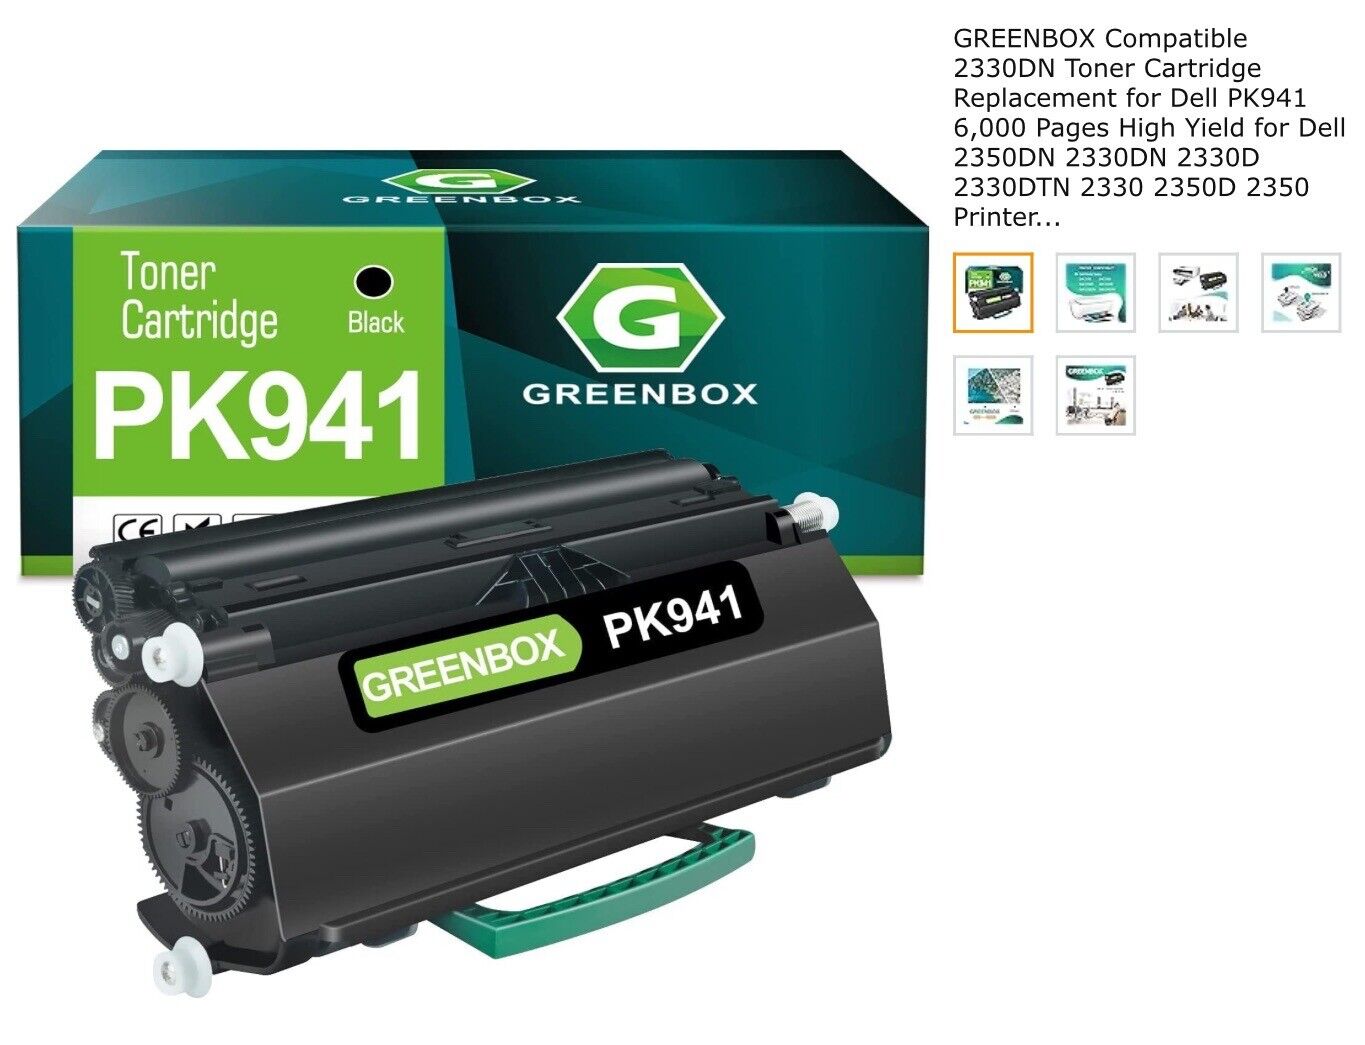 Greenbox Replacement for Dell PK941 2350DN 2330DN 2330D 2330DTN 2330 2350D 2350